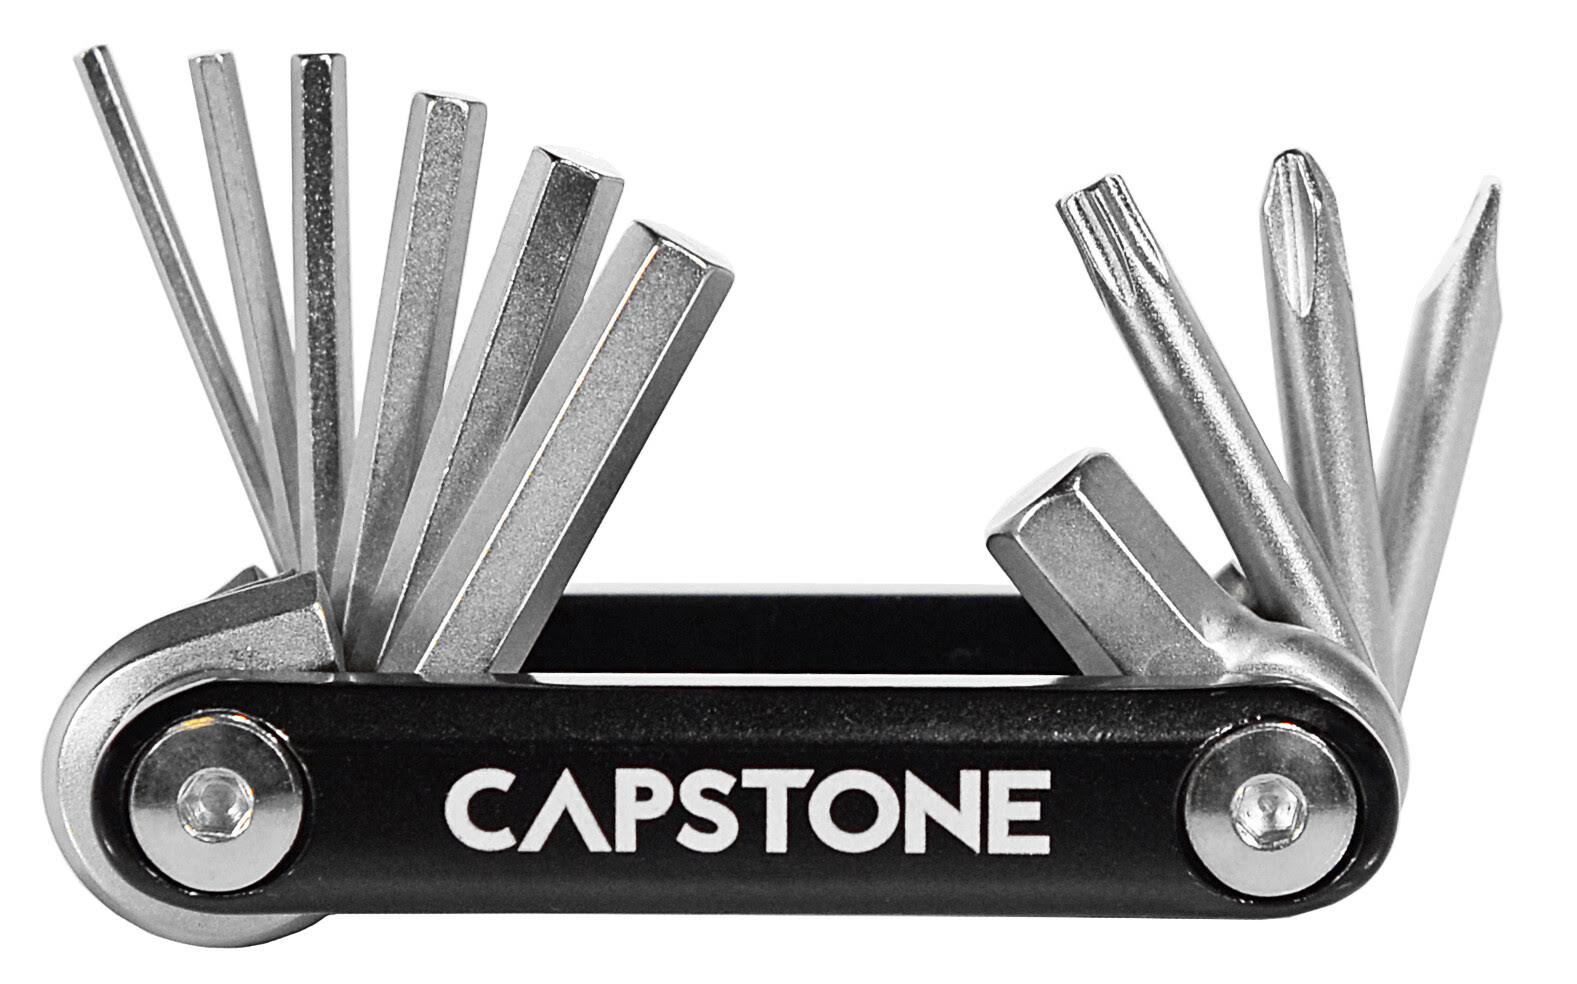 Capstone 65114 Folding Multi Bike Tool - Black, 10 Function